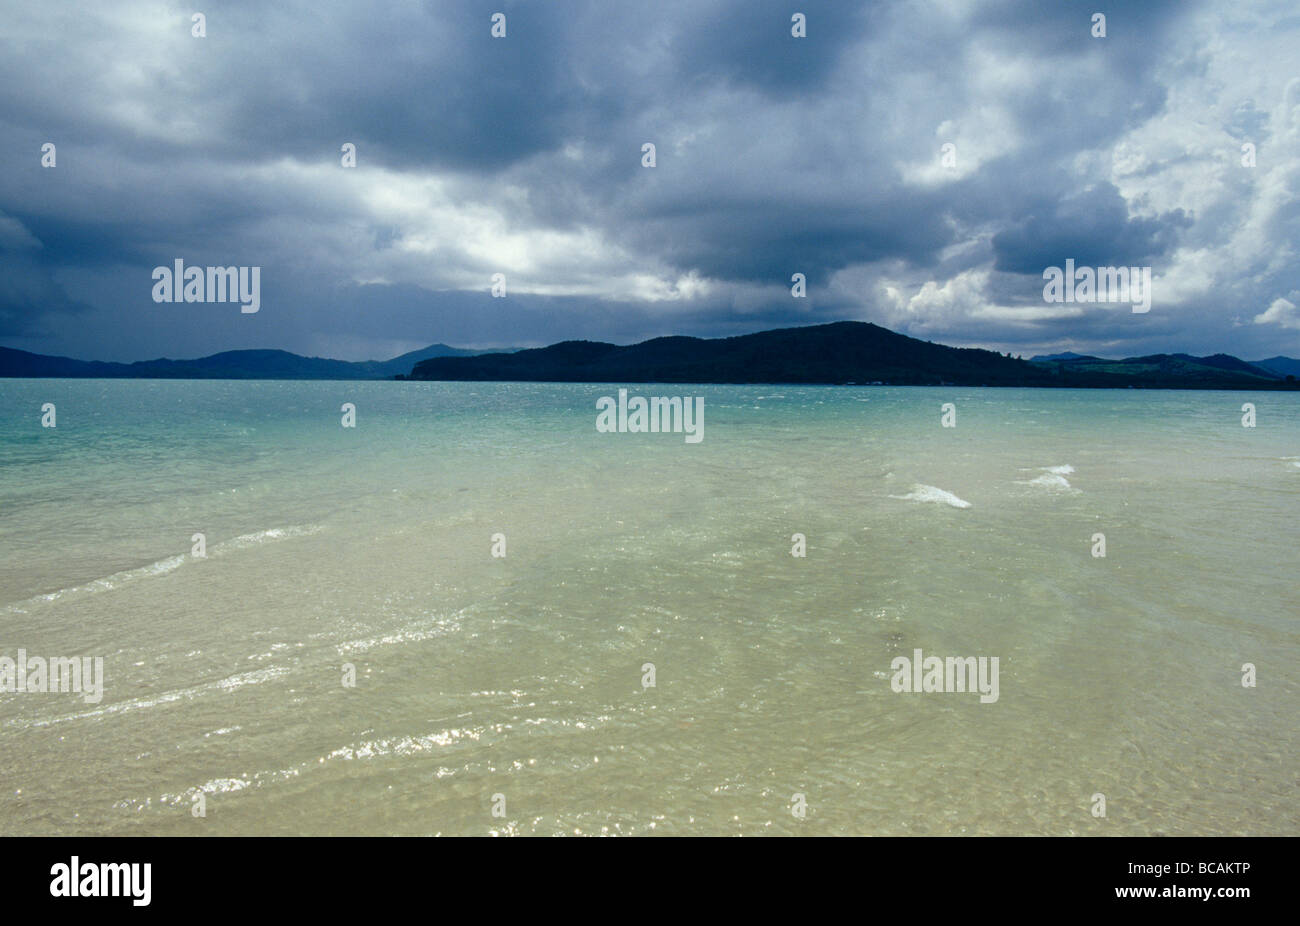 Limpide acque blu giro di una spiaggia di sabbia bianca davanti a nuvole temporalesche. Foto Stock